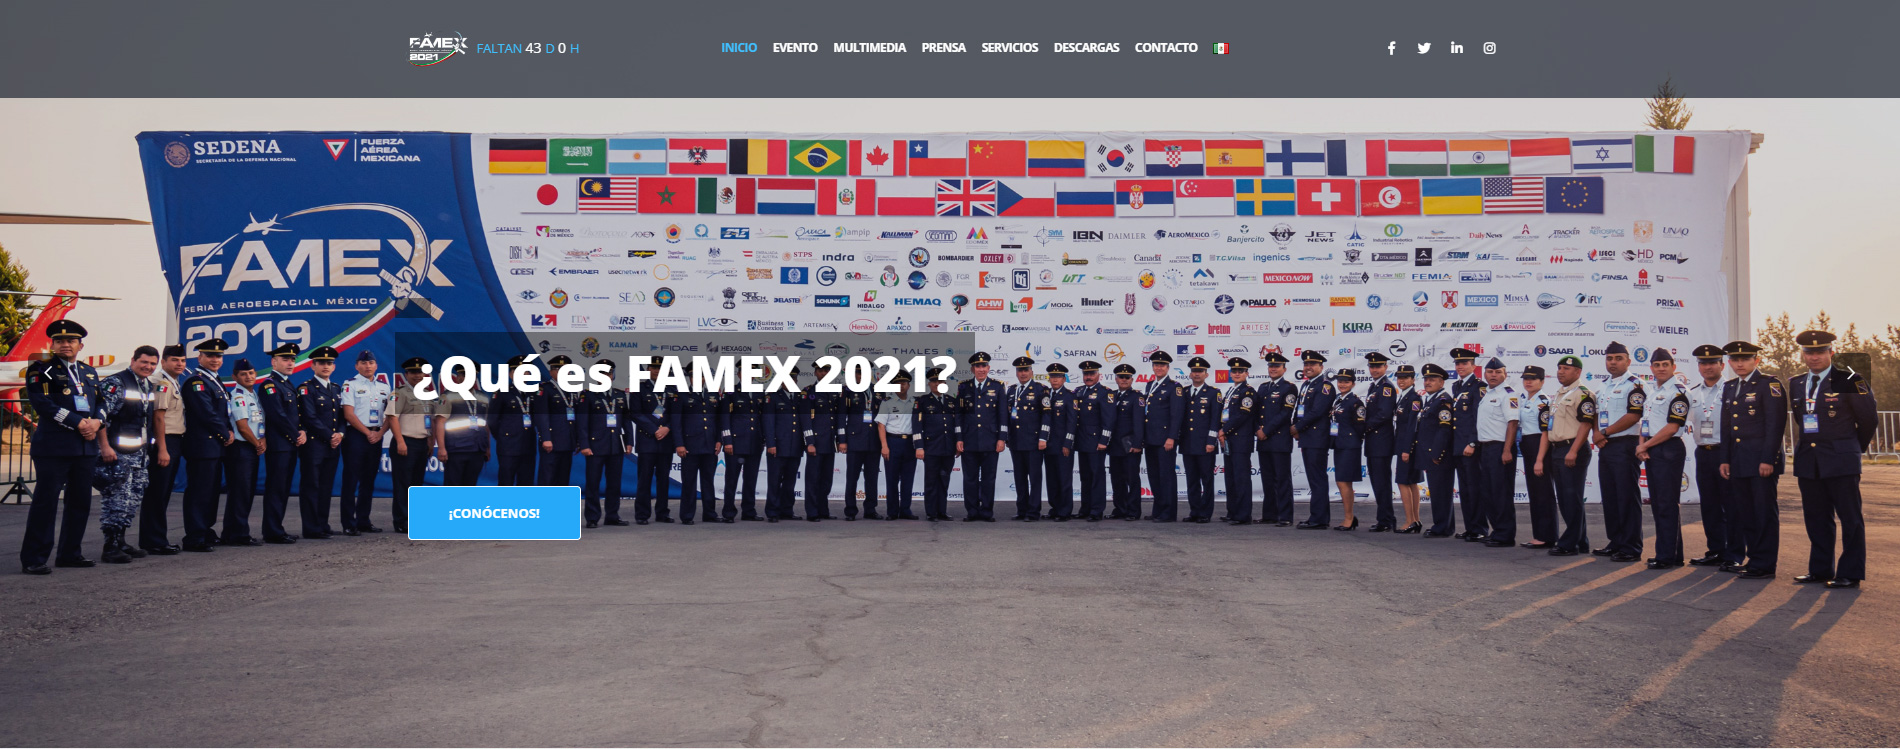 GH will attend the Famex 2021 fair